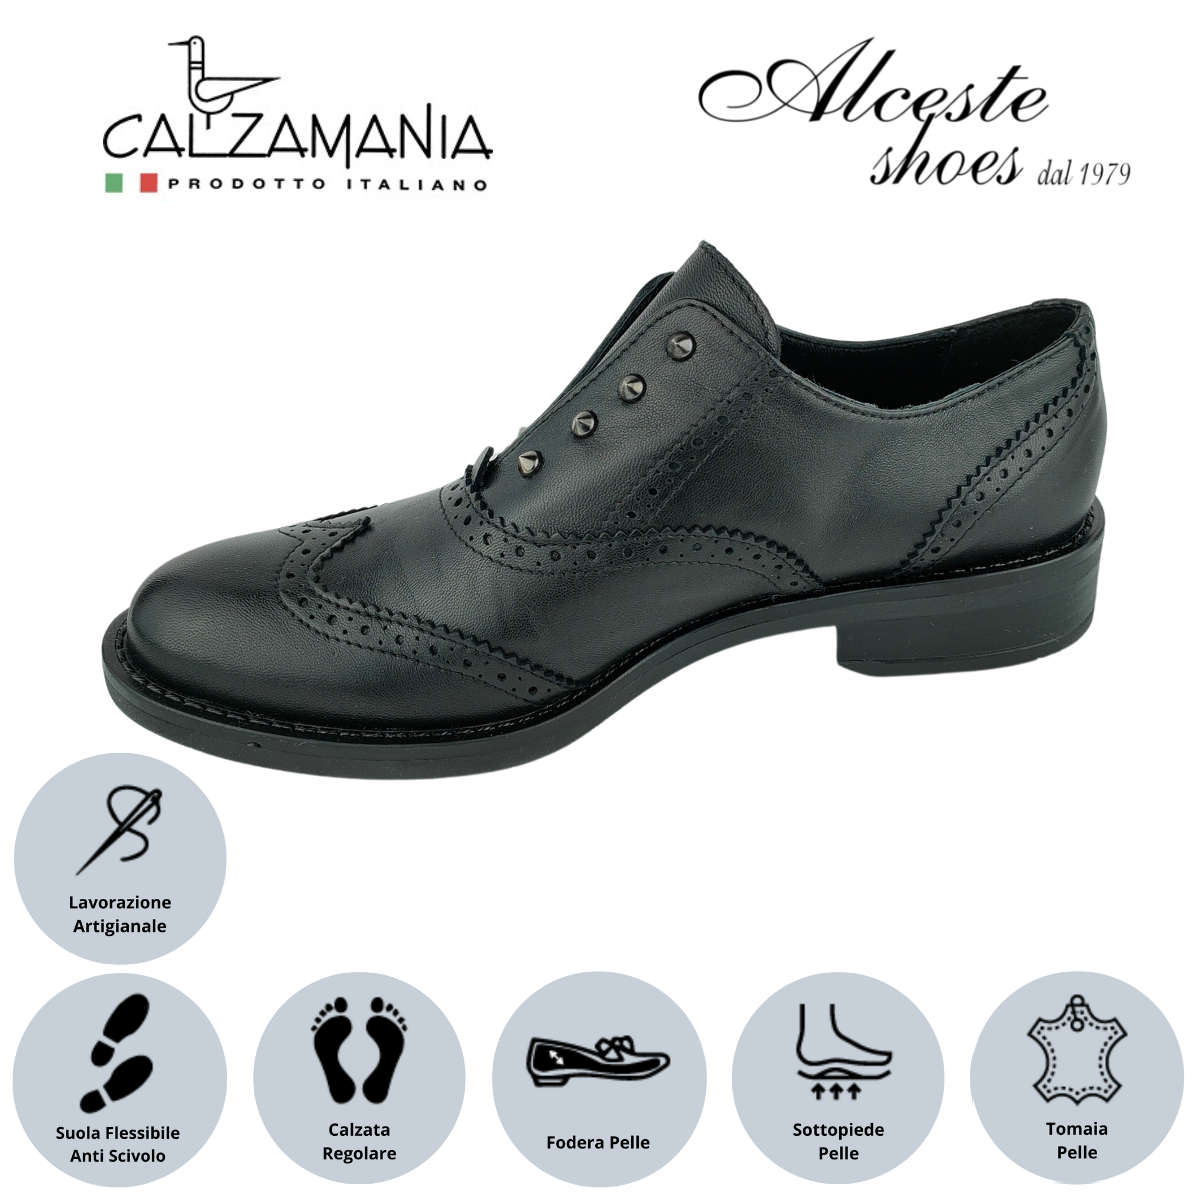 Francesina Donna con Elastico "Calzamania" Art. 1010 in Pelle Nero Alceste Shoes 24